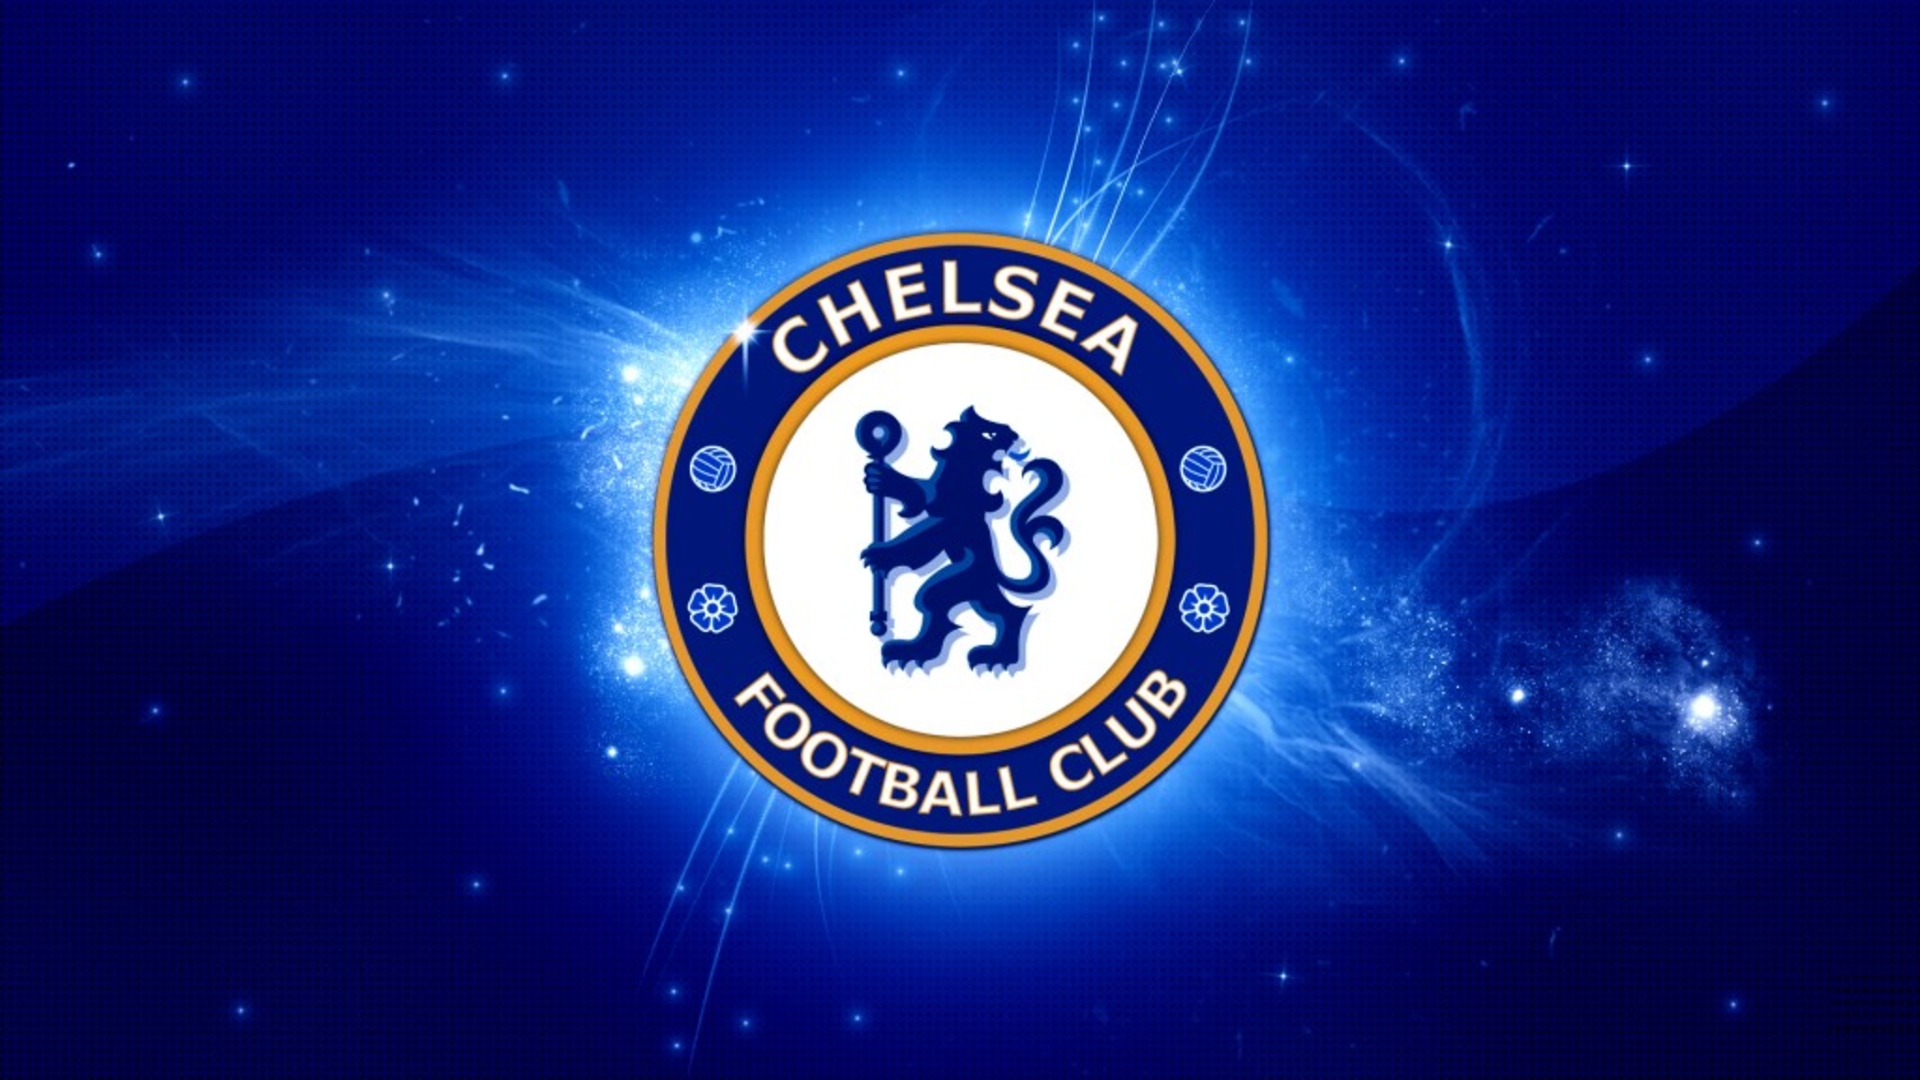 Football Club Chelsea Logo Wallpaper And Image